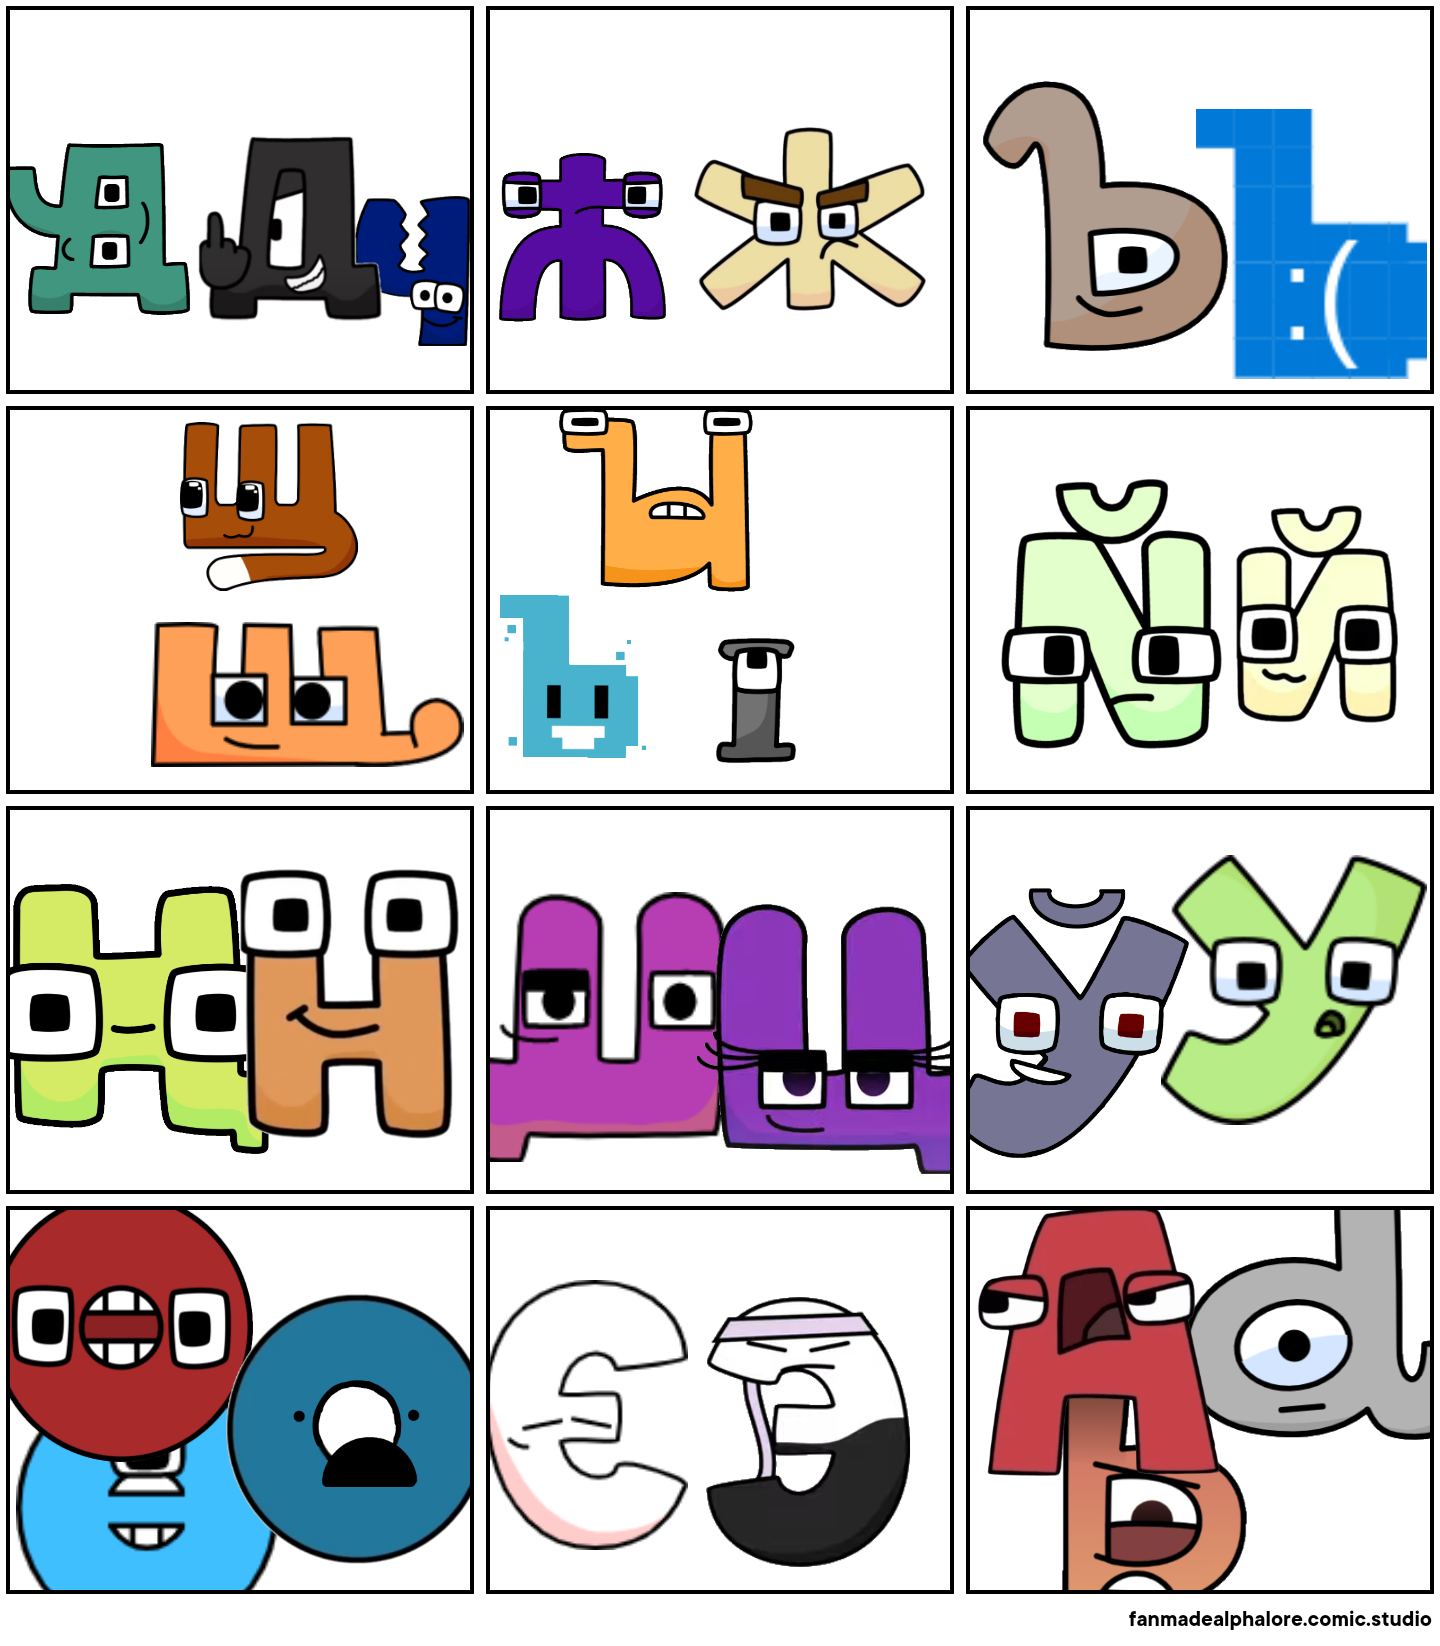 Fanmade Alphabet Lore Comic Studio - make comics & memes with Fanmade Alphabet  Lore characters